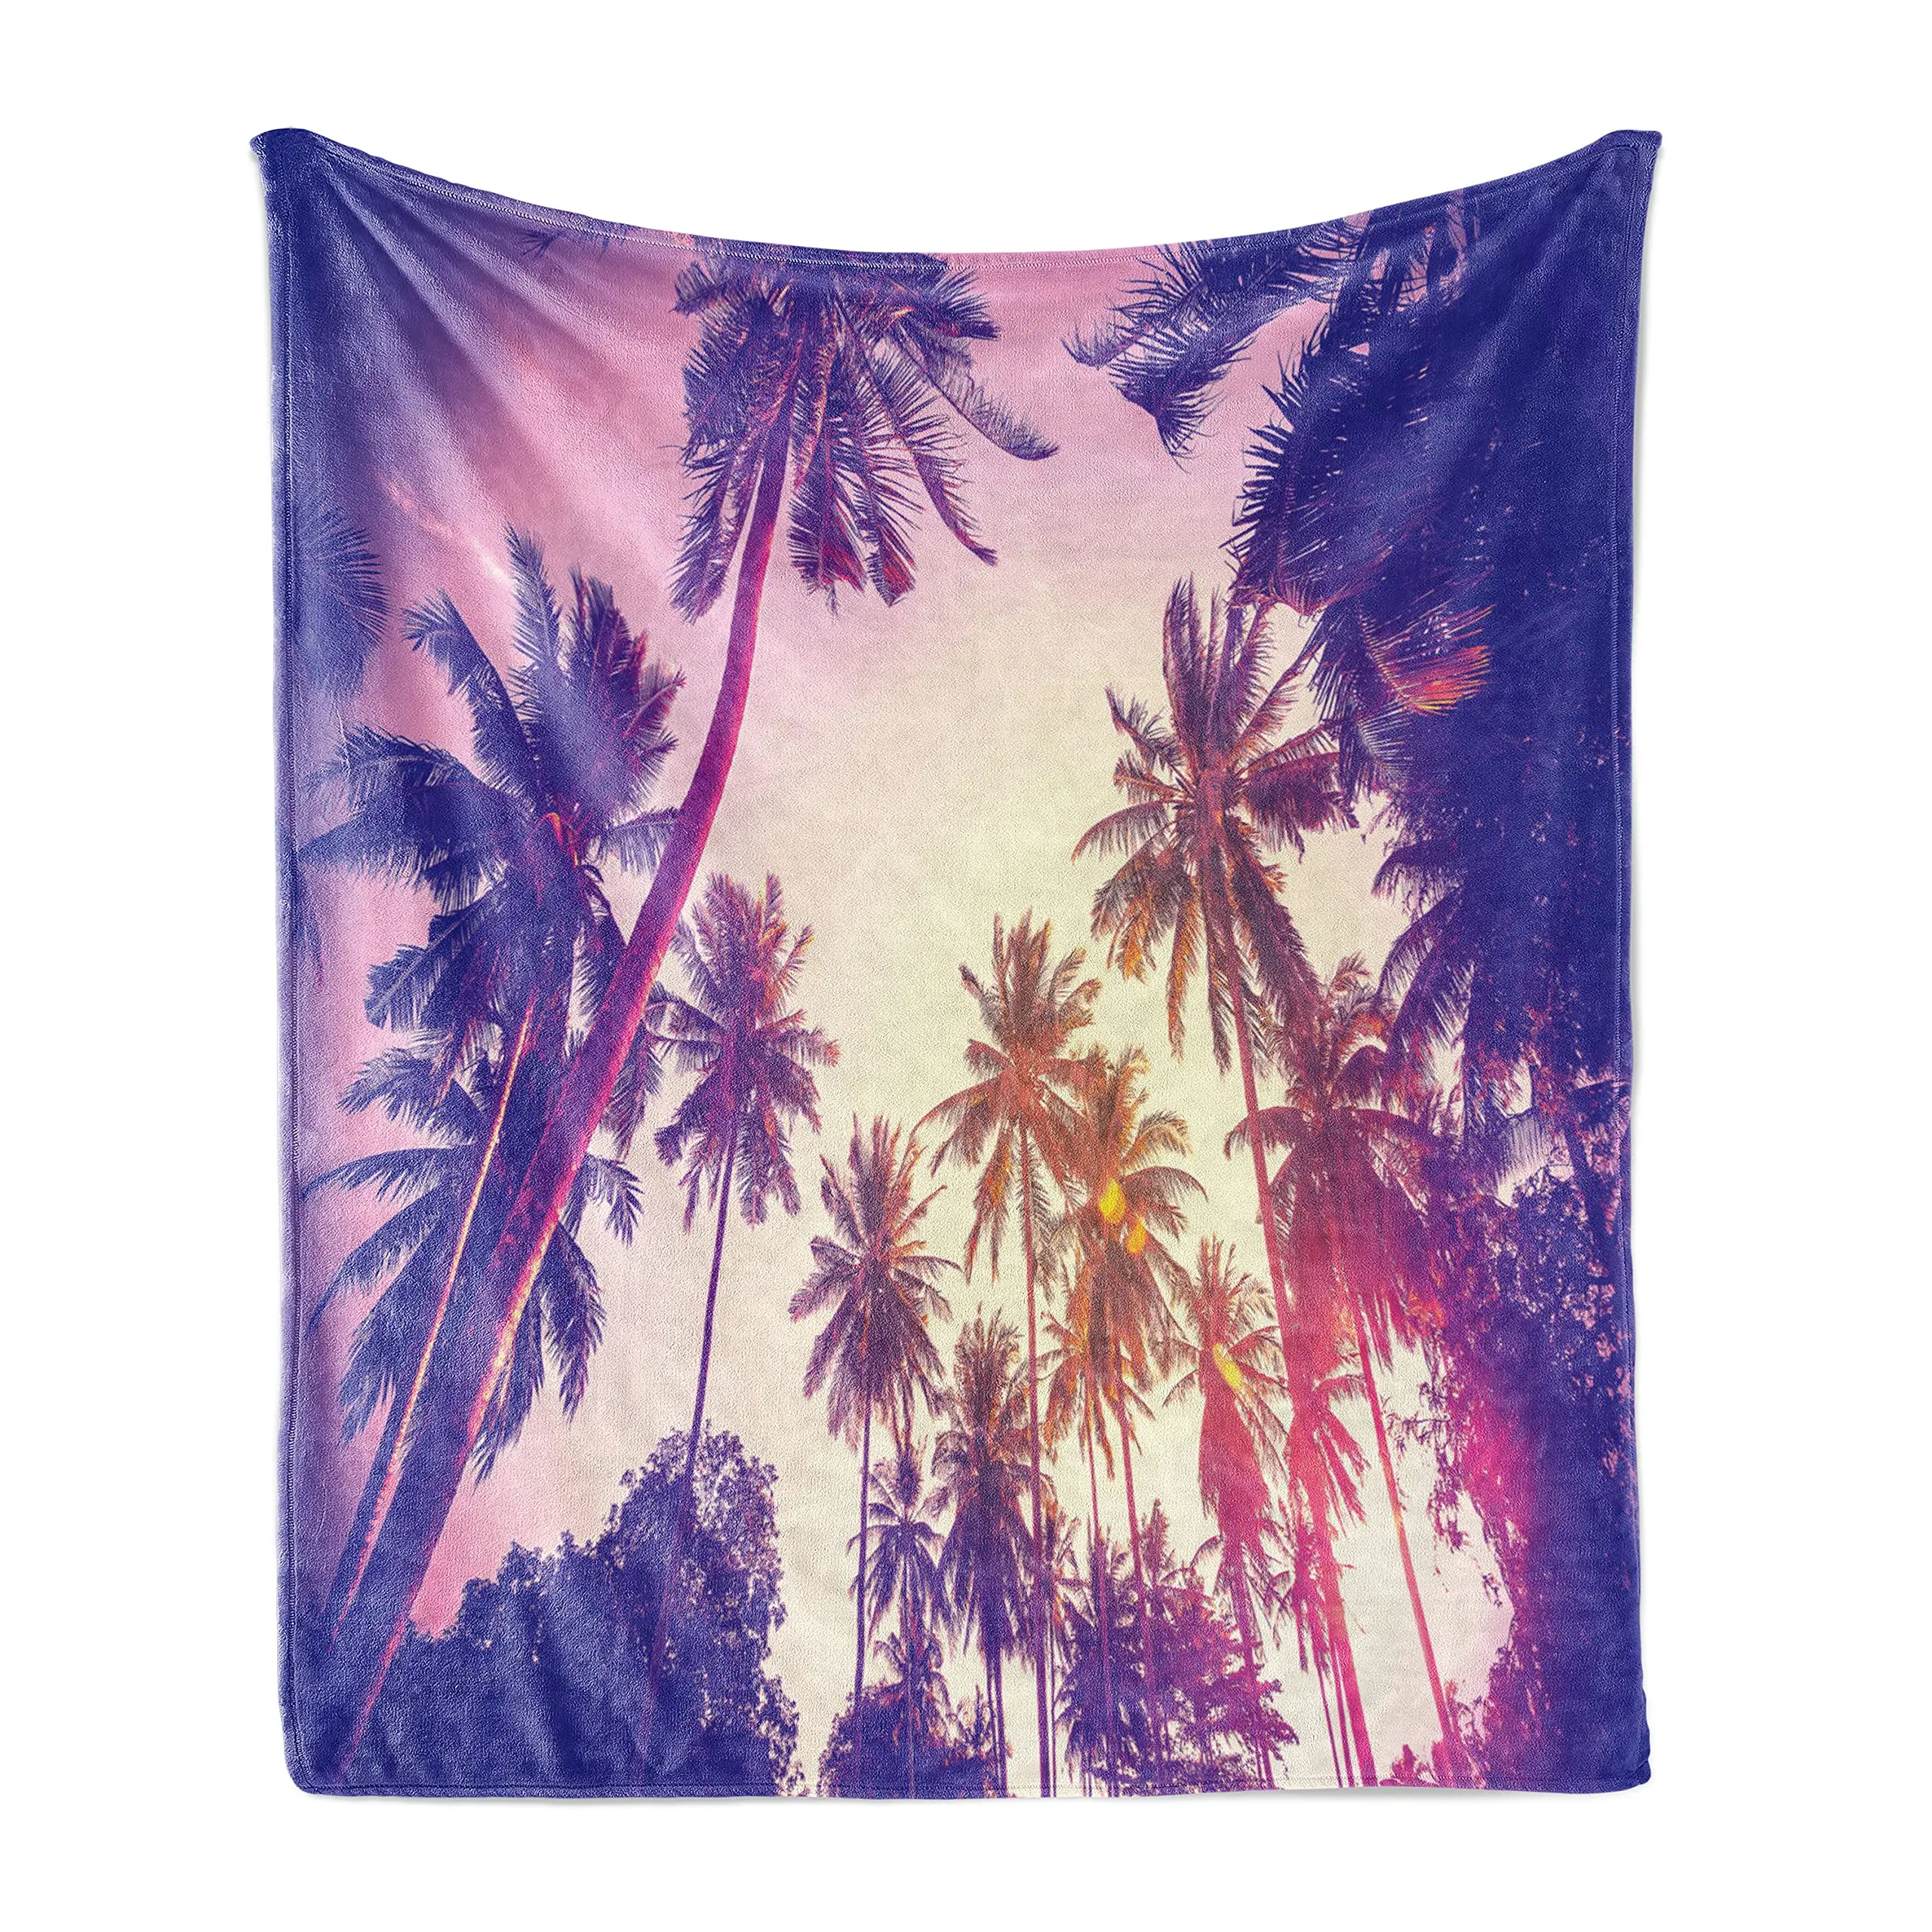 

Blanket Hawaiian Soft Flannel Throw Blanket Coconut Palm Tree and Lawn on The Sandy Poipu Beach In Hawaii Kauai Print Cozy Plush